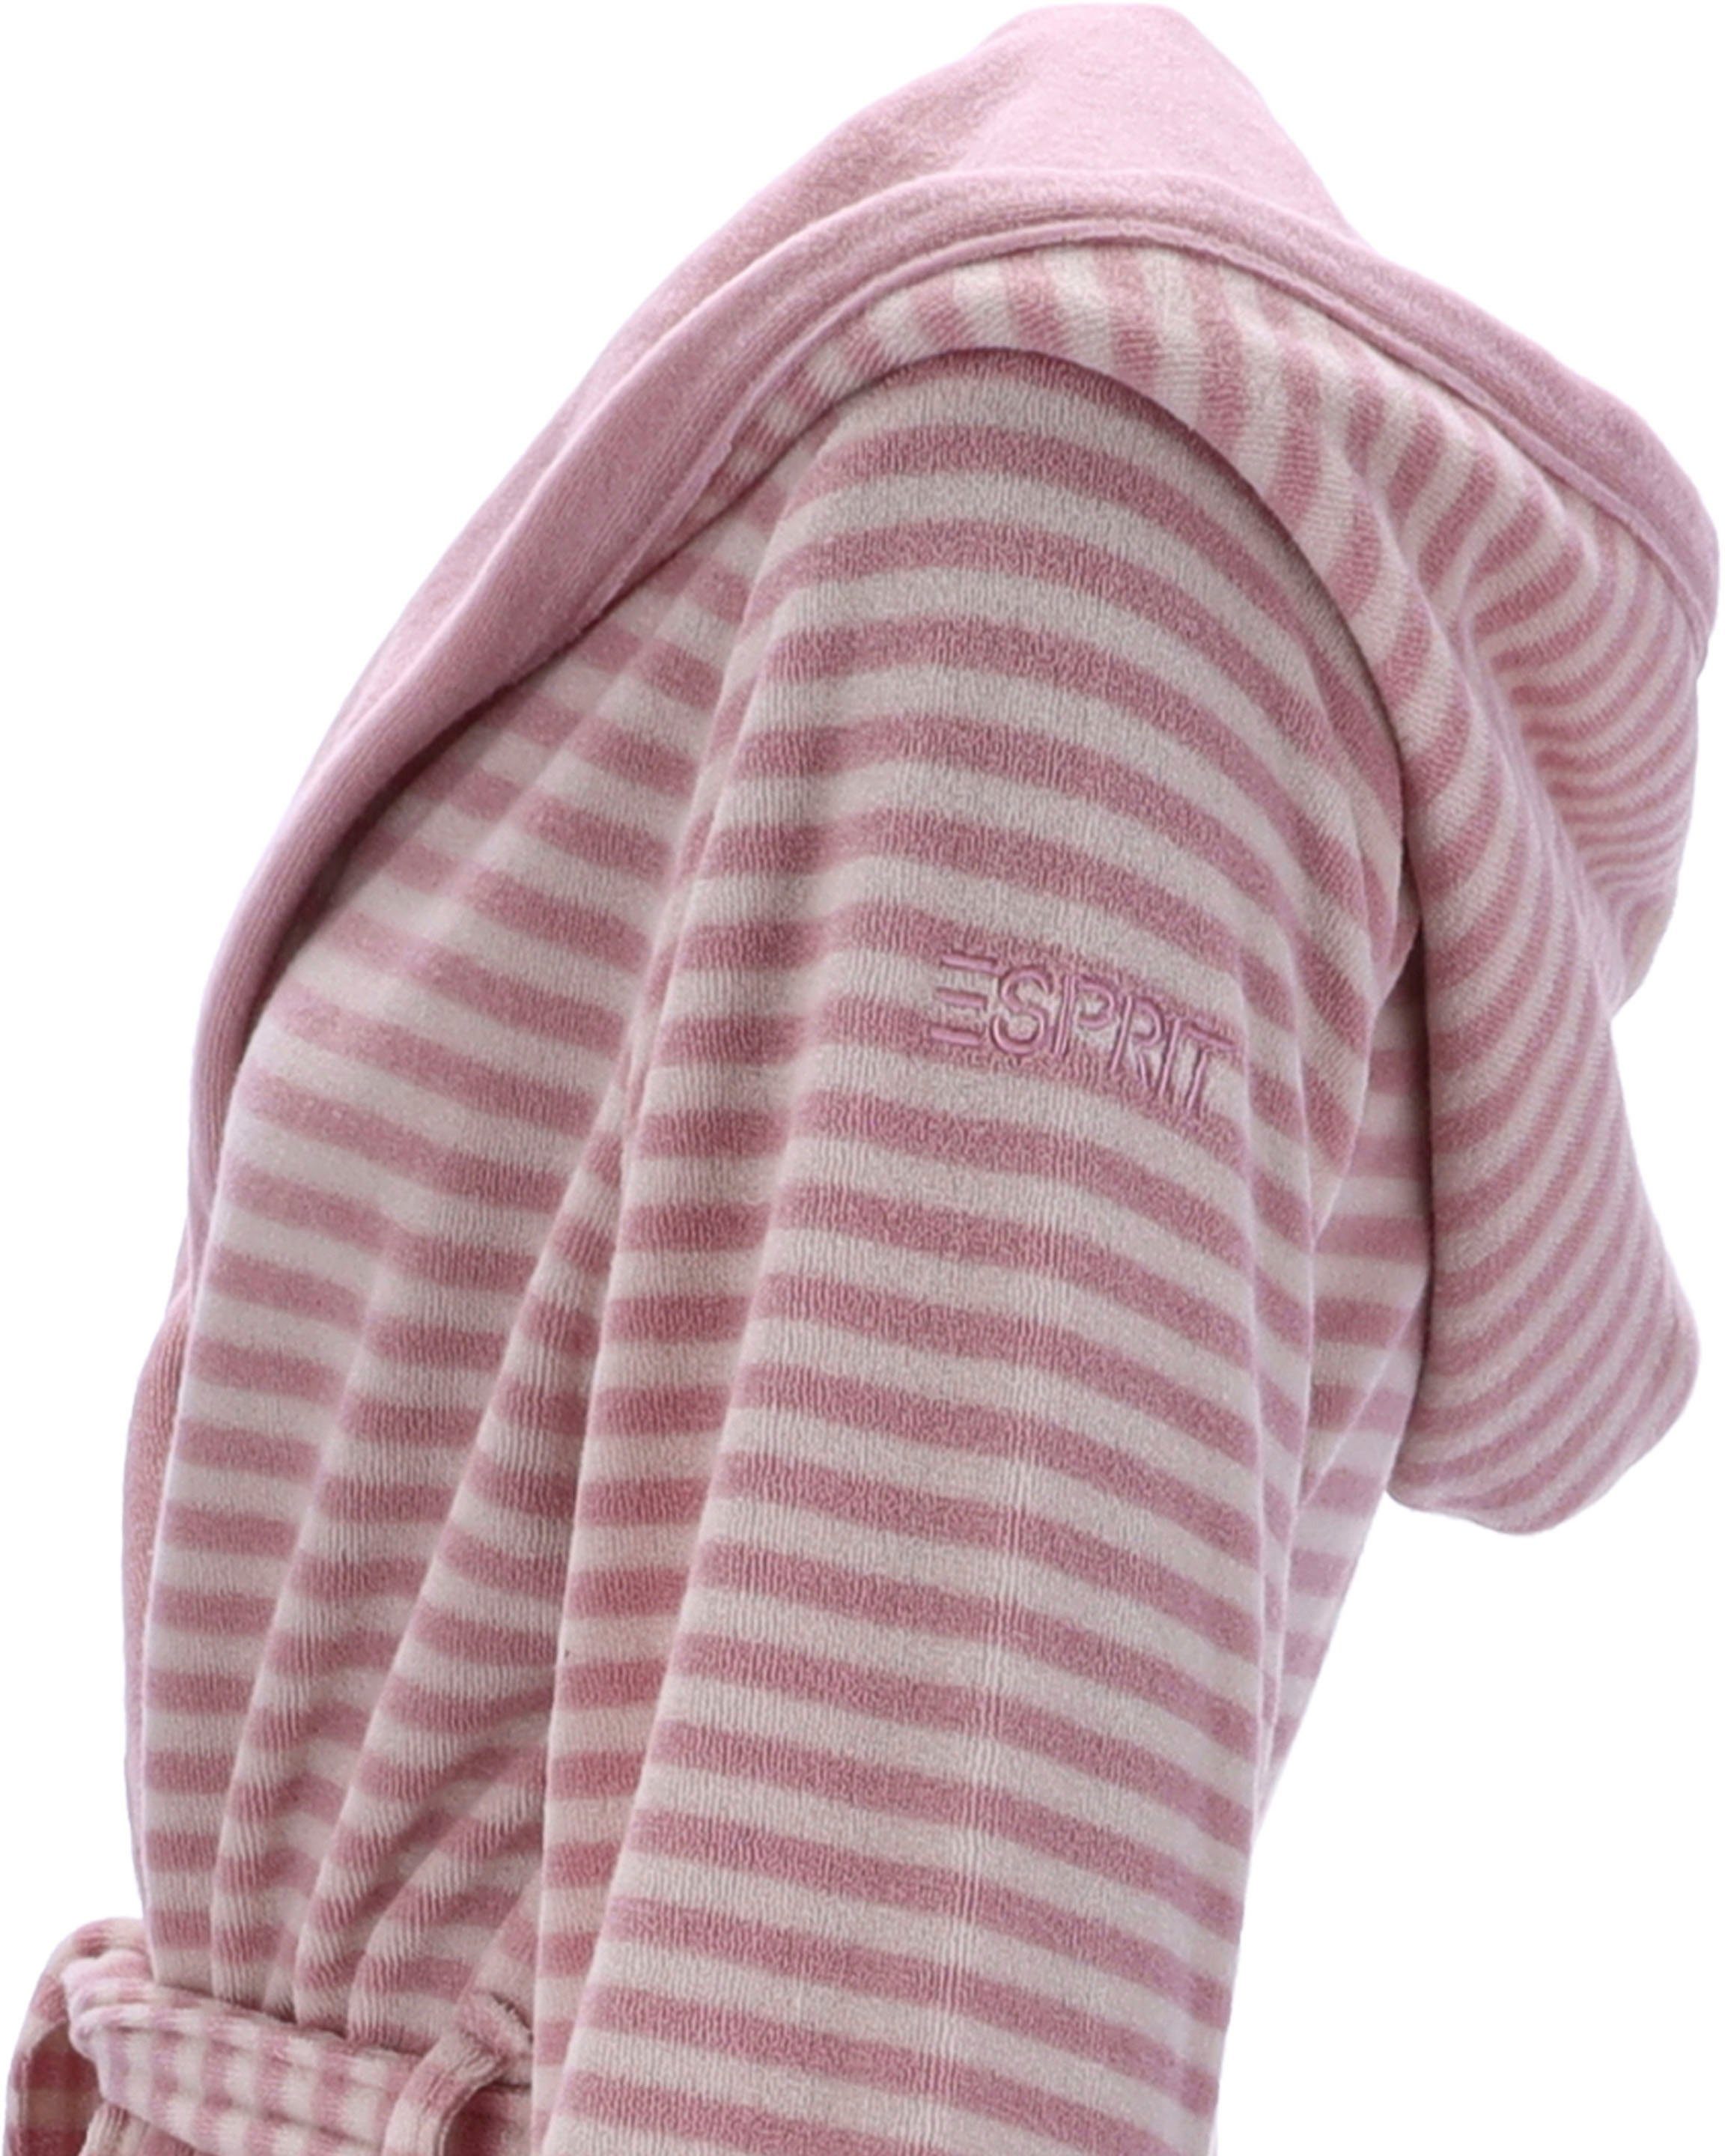 Esprit Damenbademantel Striped Hoody, Kurzform, mit & kurz Kaputze Gürtel, Jersey, gestreift, rose Logostickerei, Kapuze